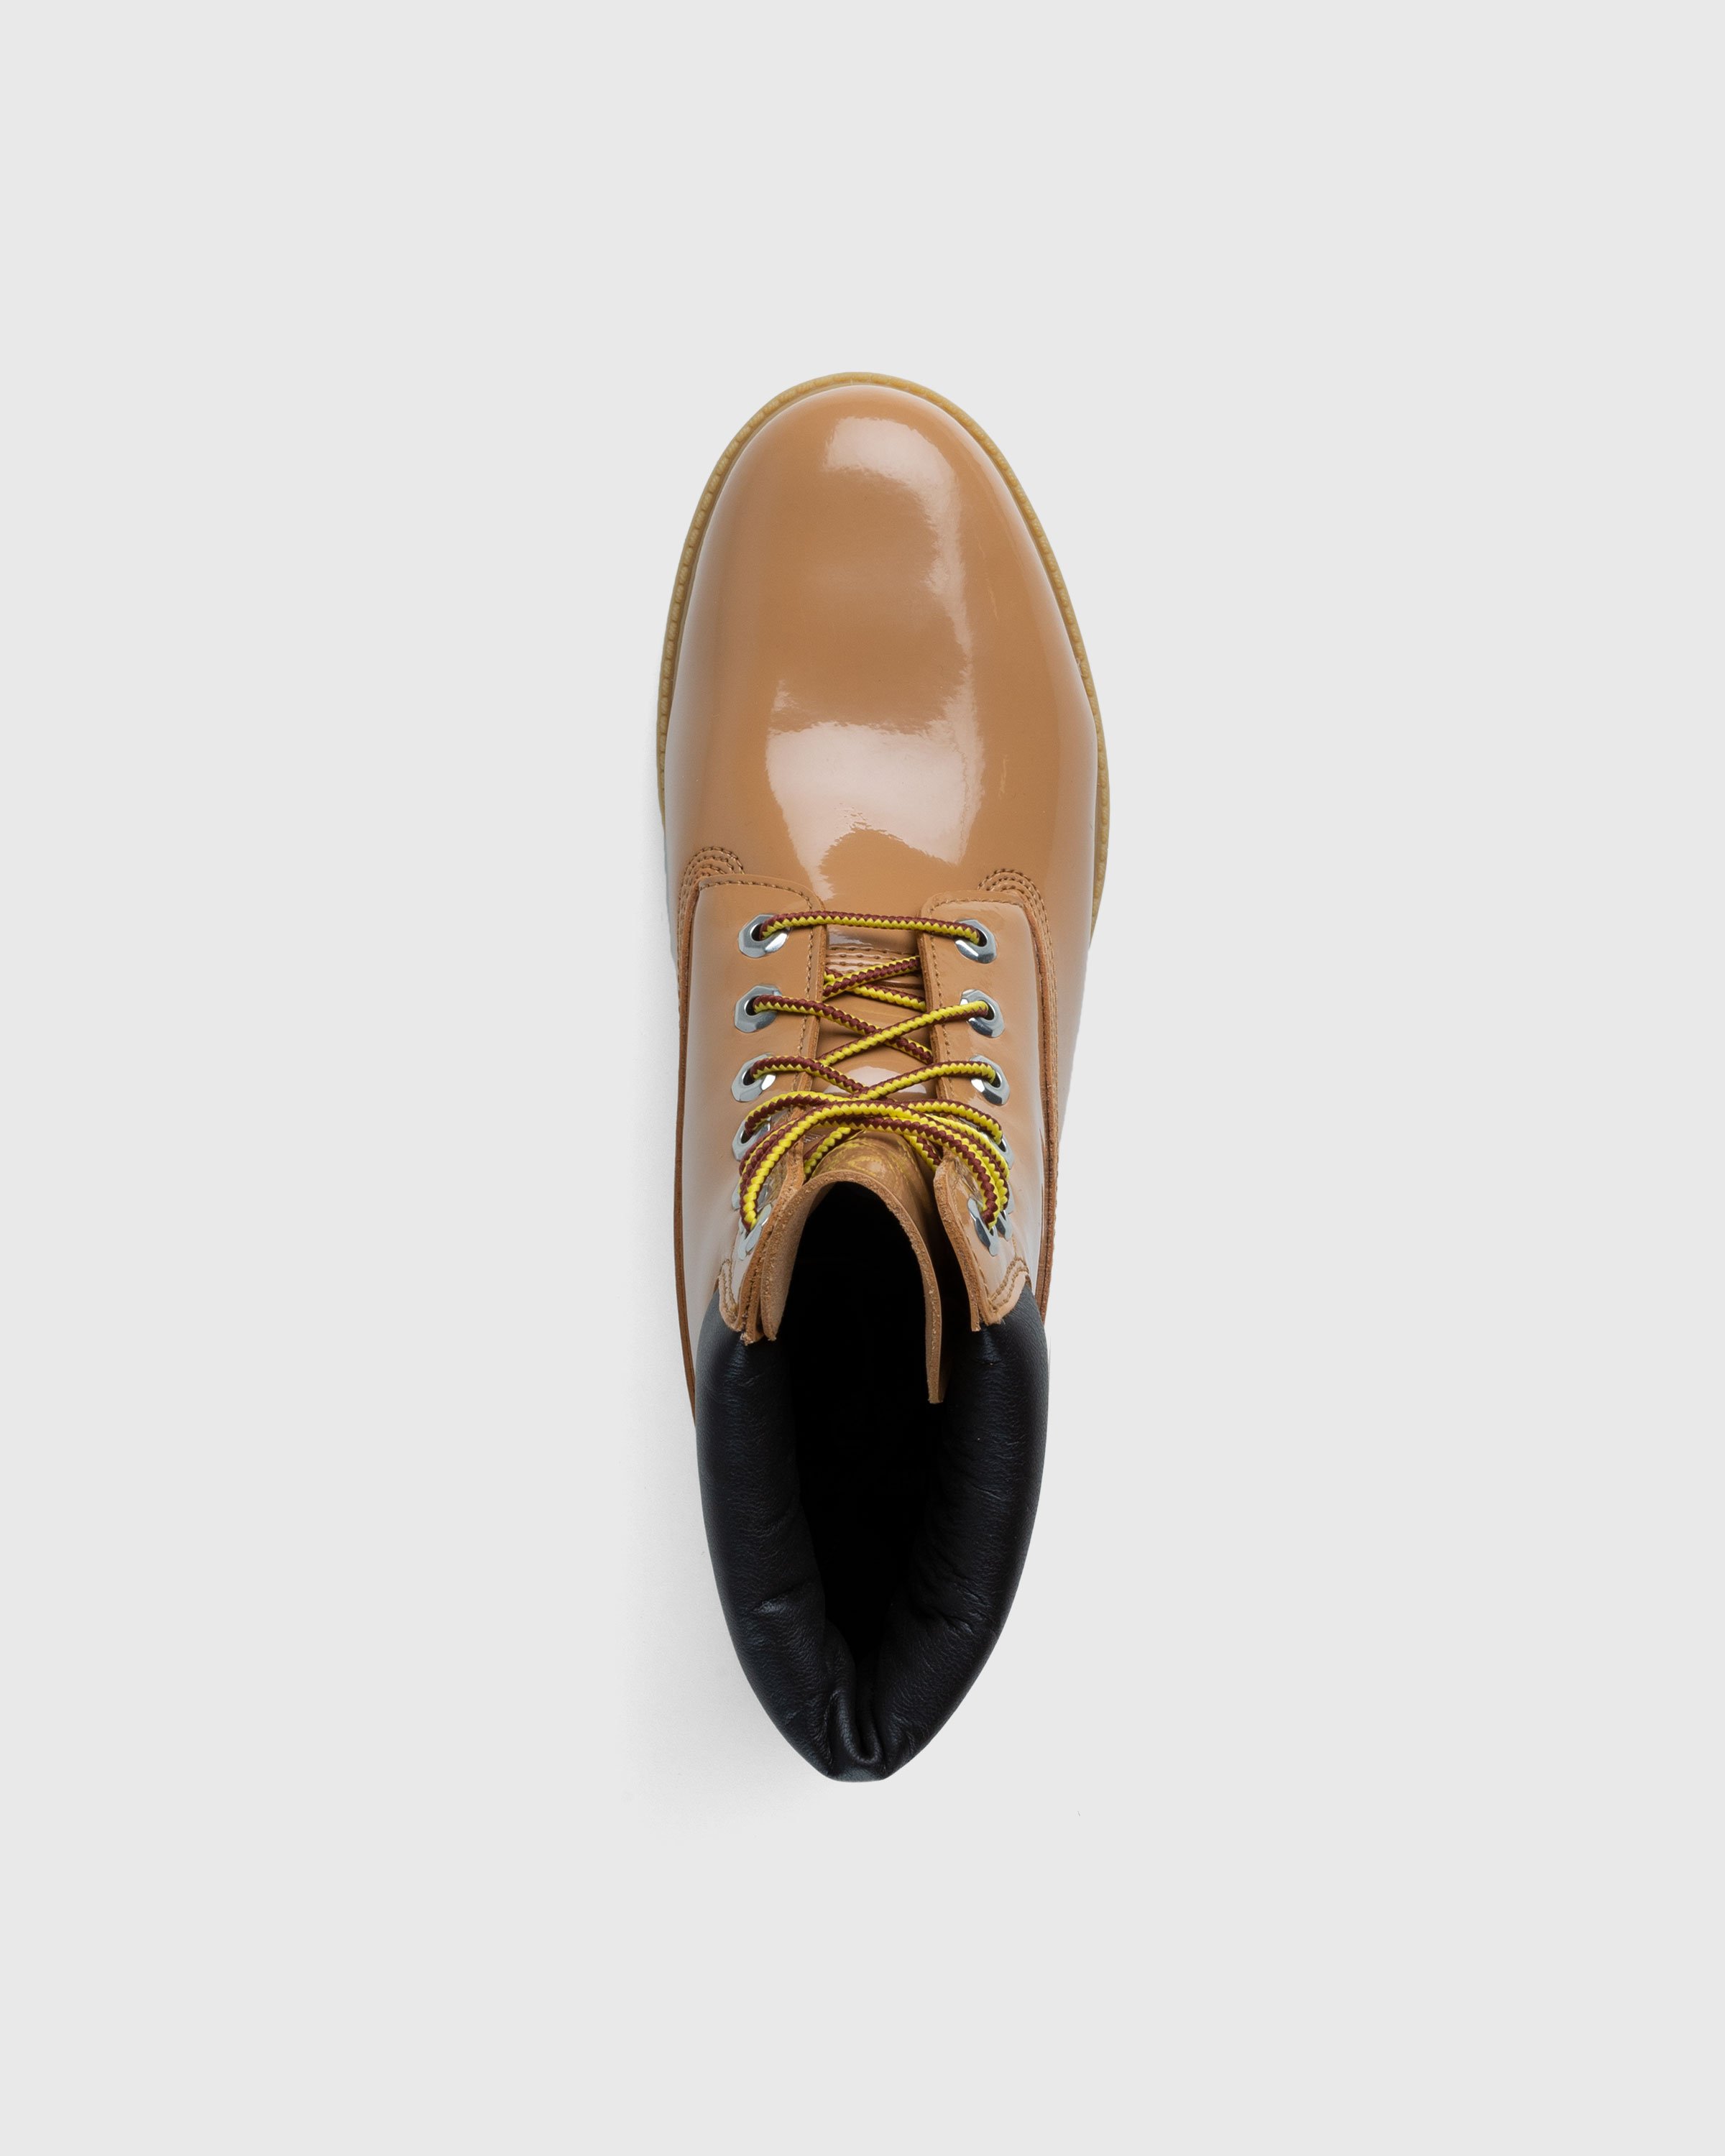 Veneda Carter x Timberland - 6" Patent Leather Boot - Footwear - Brown - Image 5